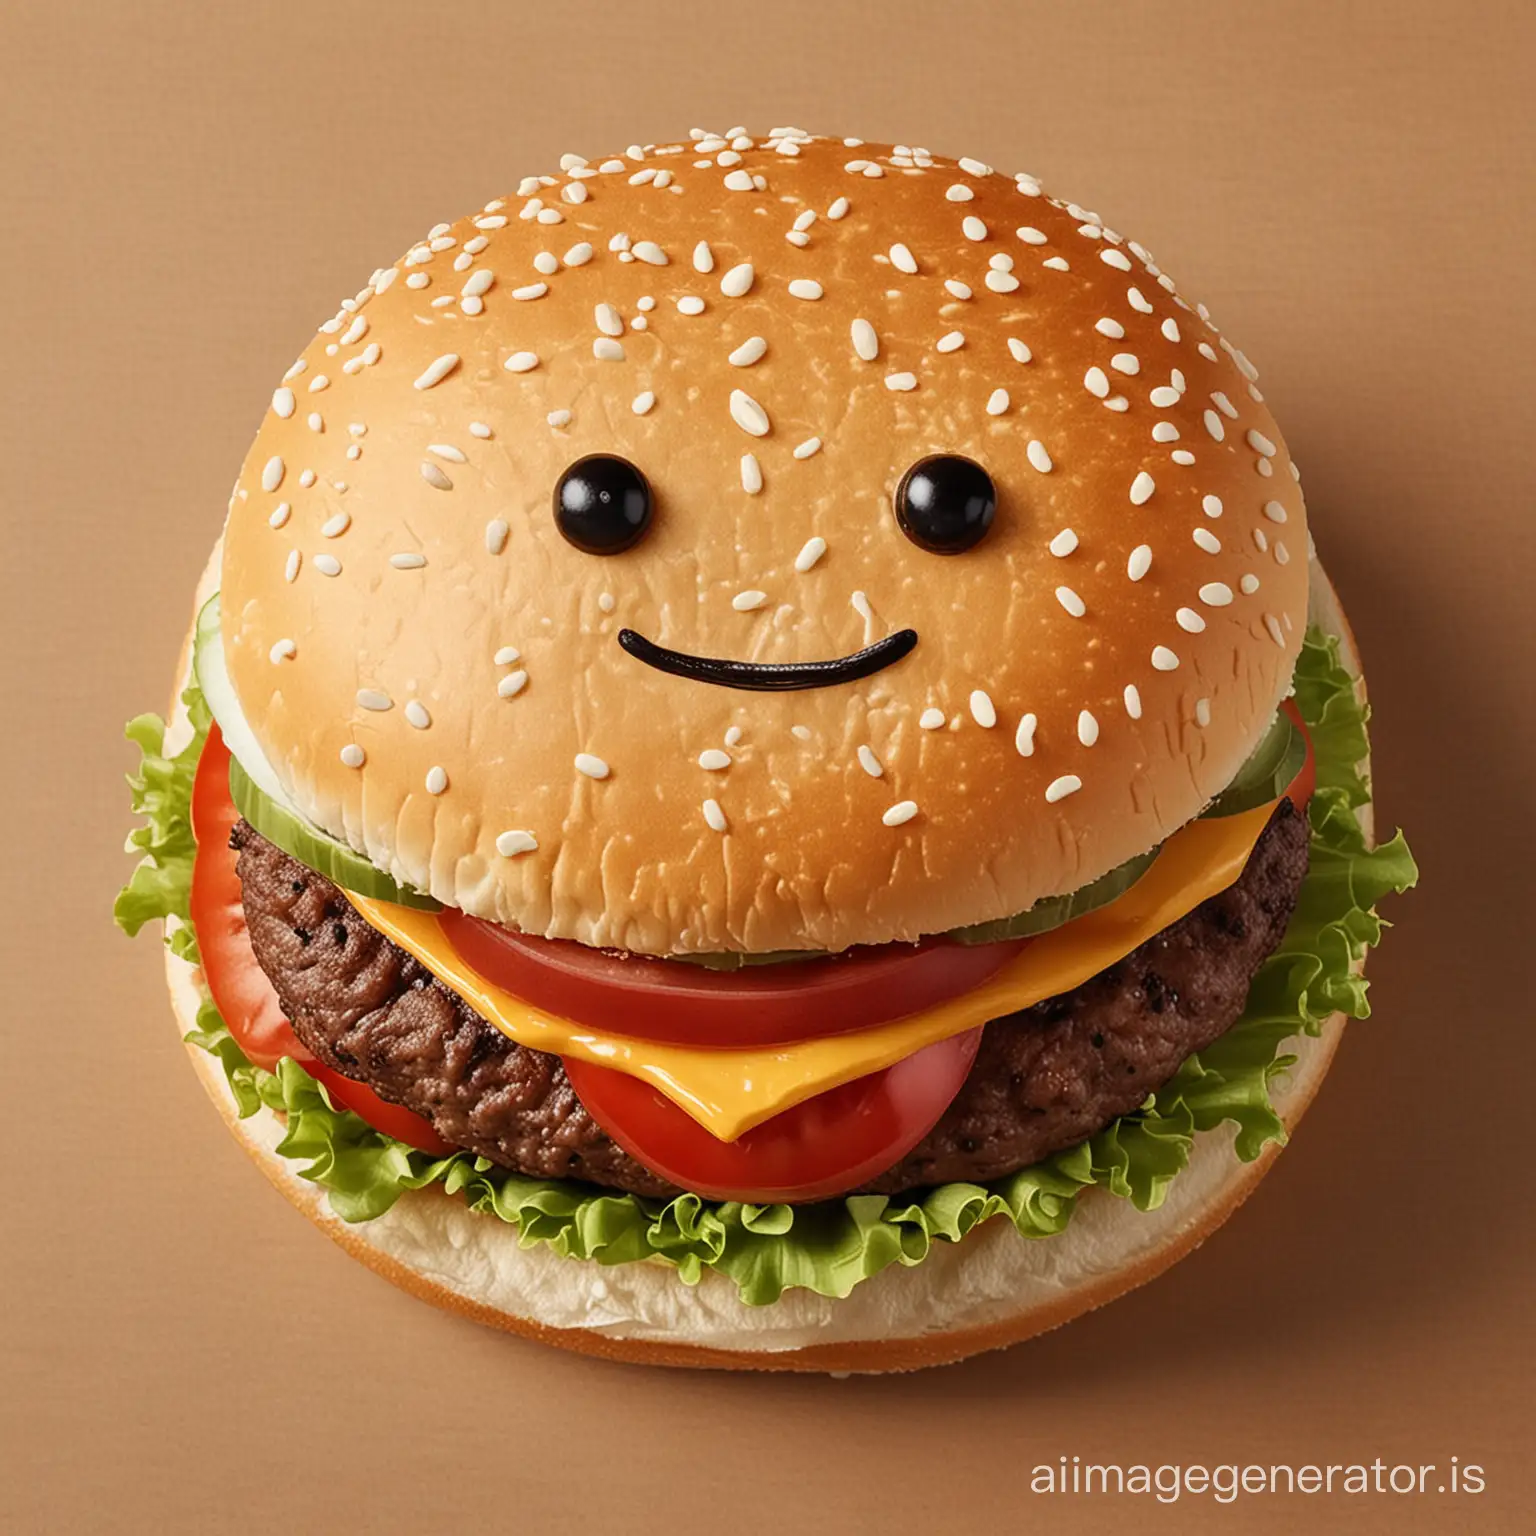 make a burger with a cute face